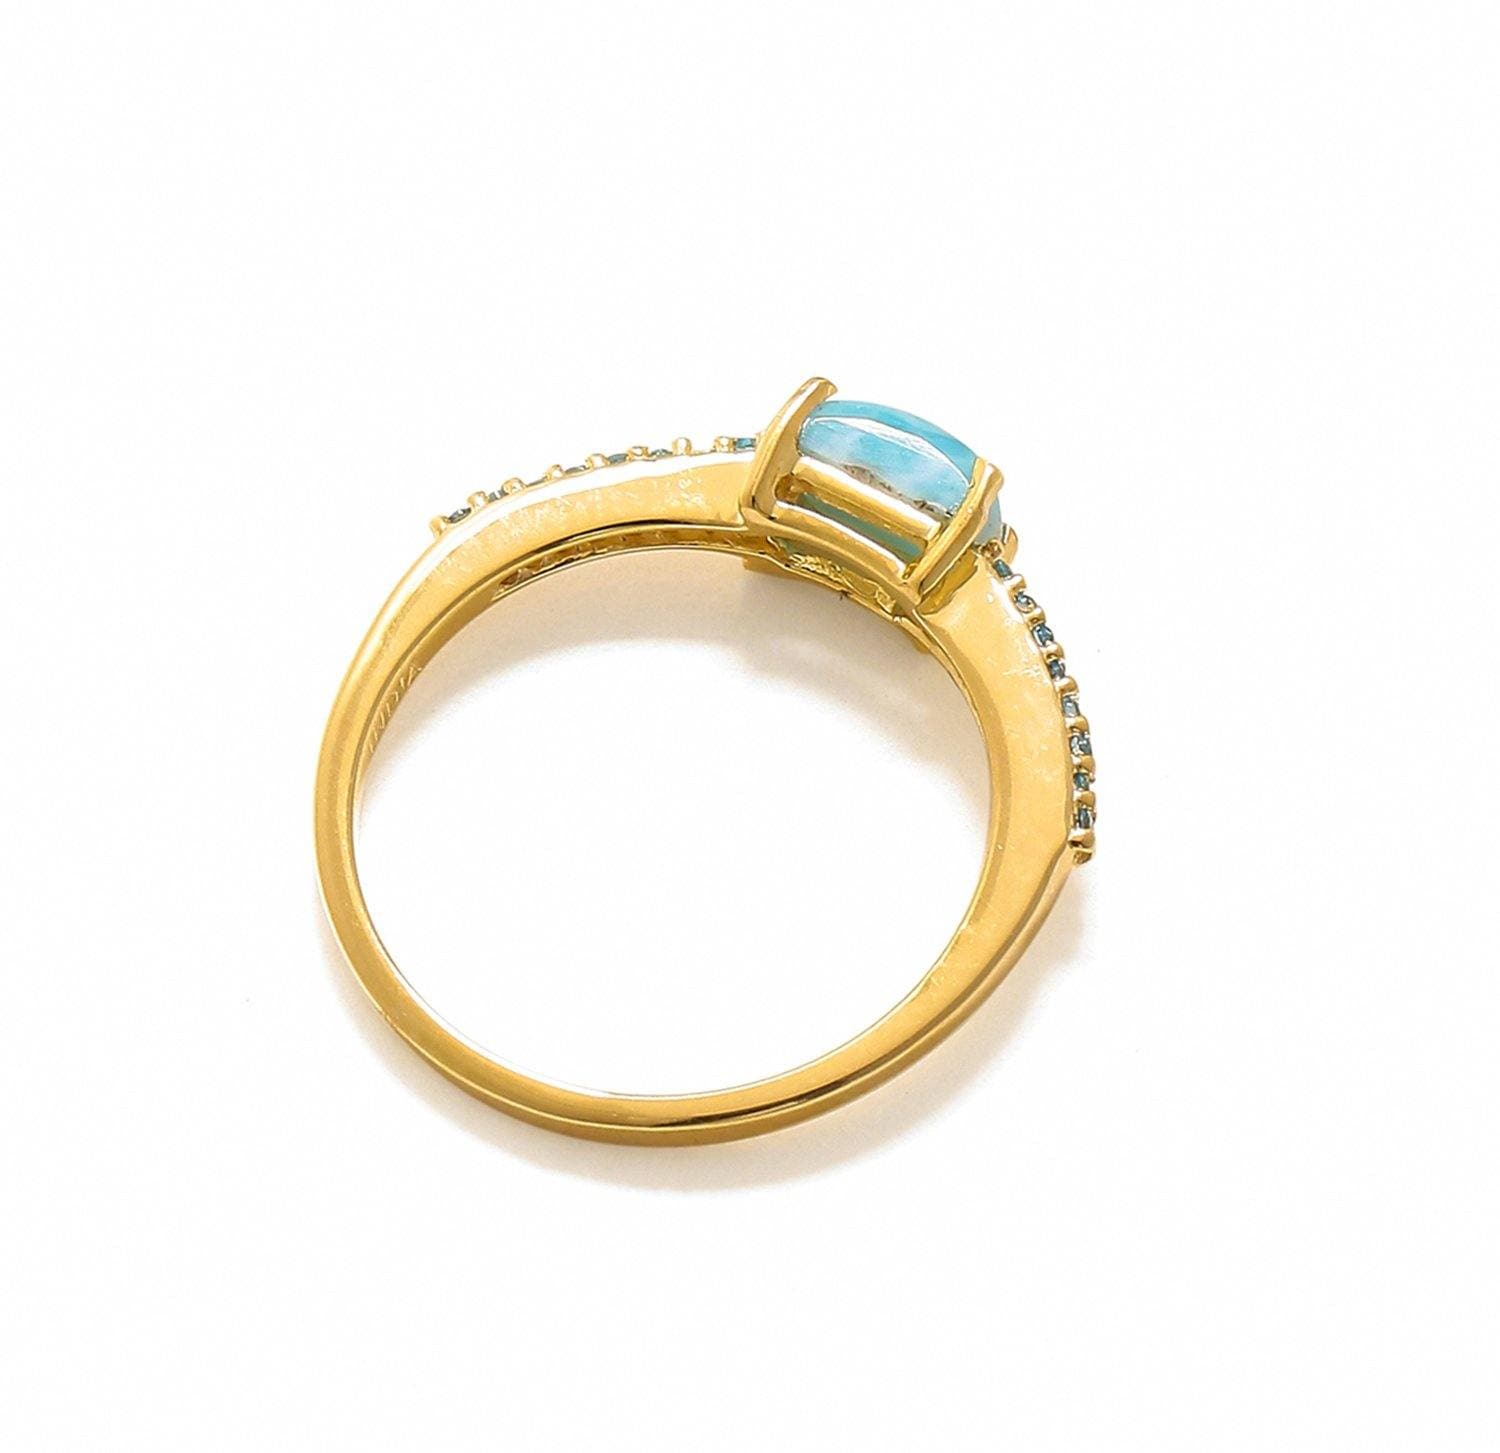 0.69 Ct Larimar London Blue Topaz Solid 10k Yellow Gold Ring Jewelry - YoTreasure